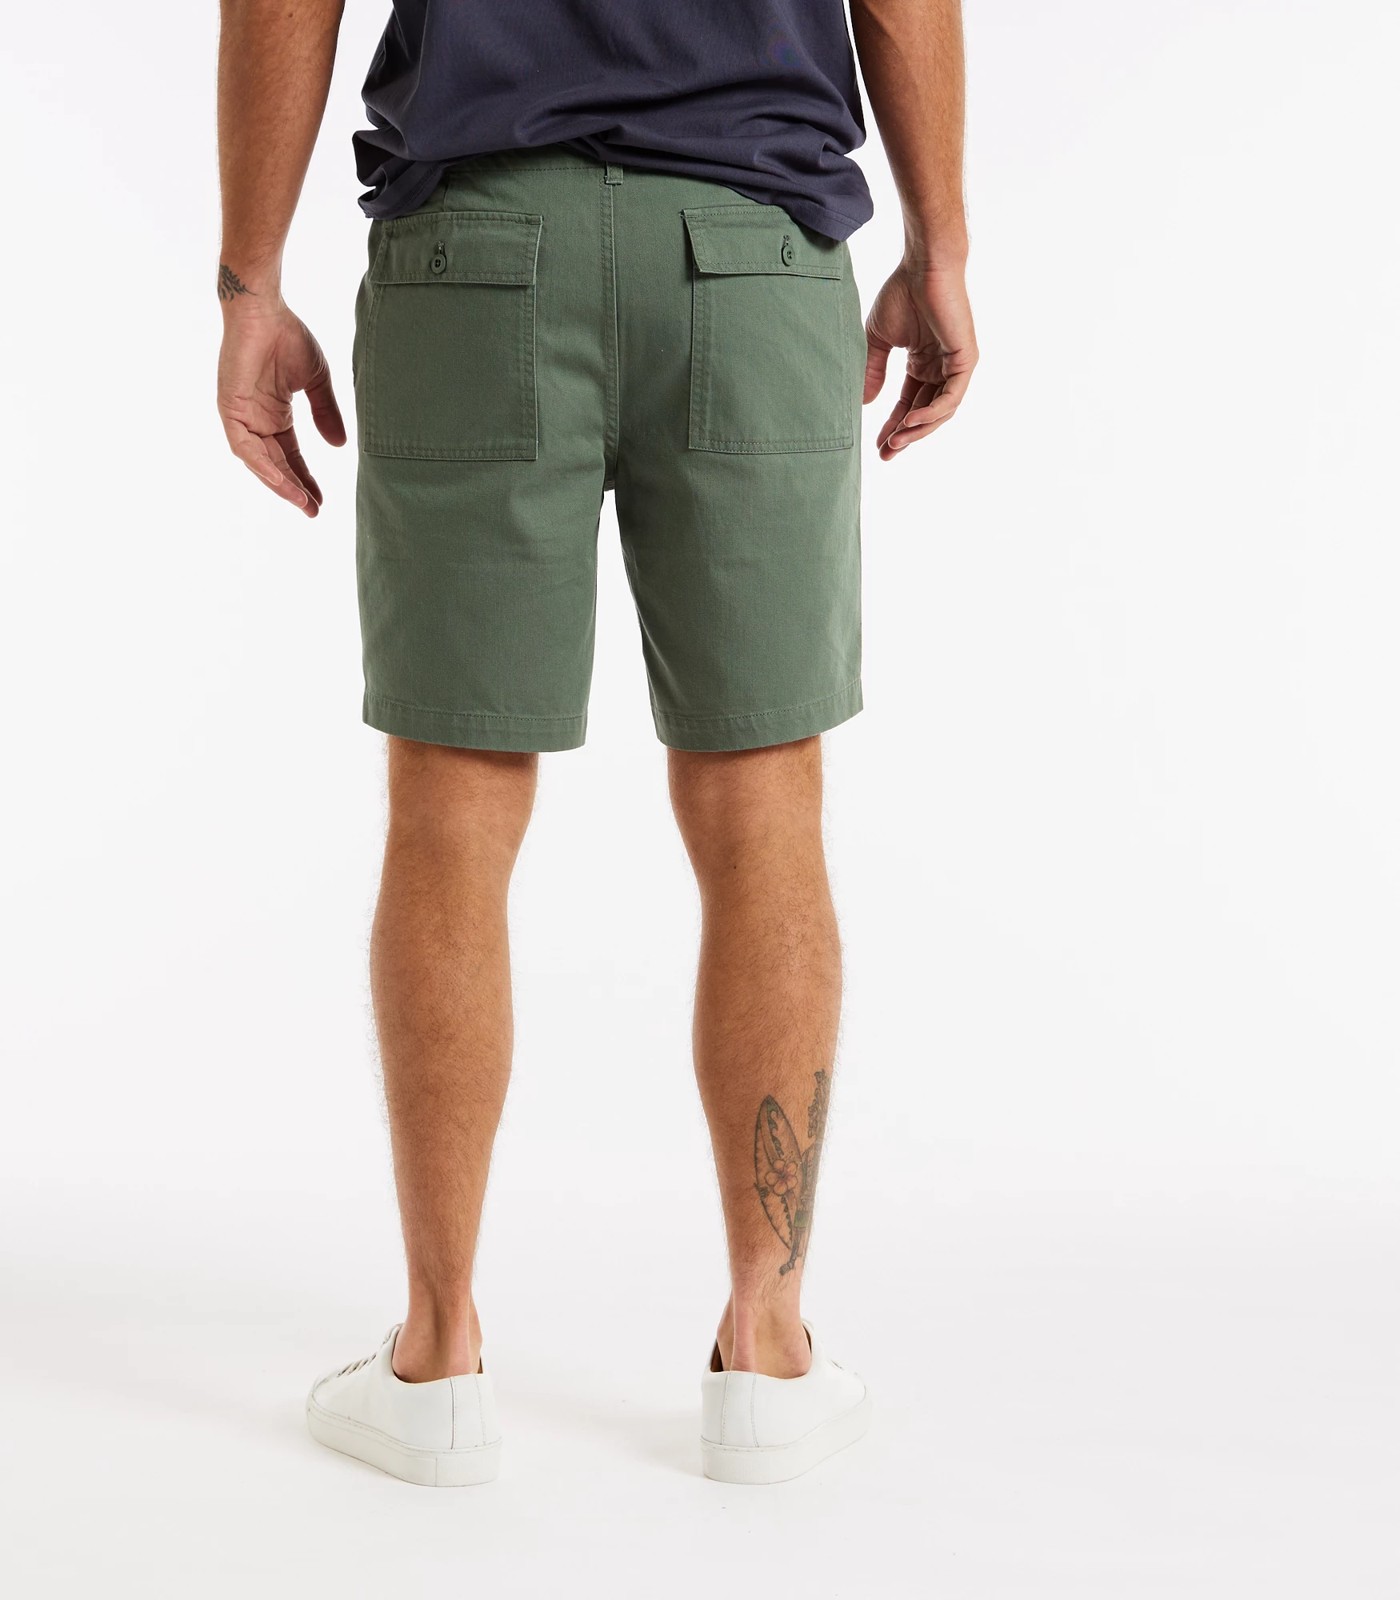 Piping Hot Woven Shorts | Target Australia